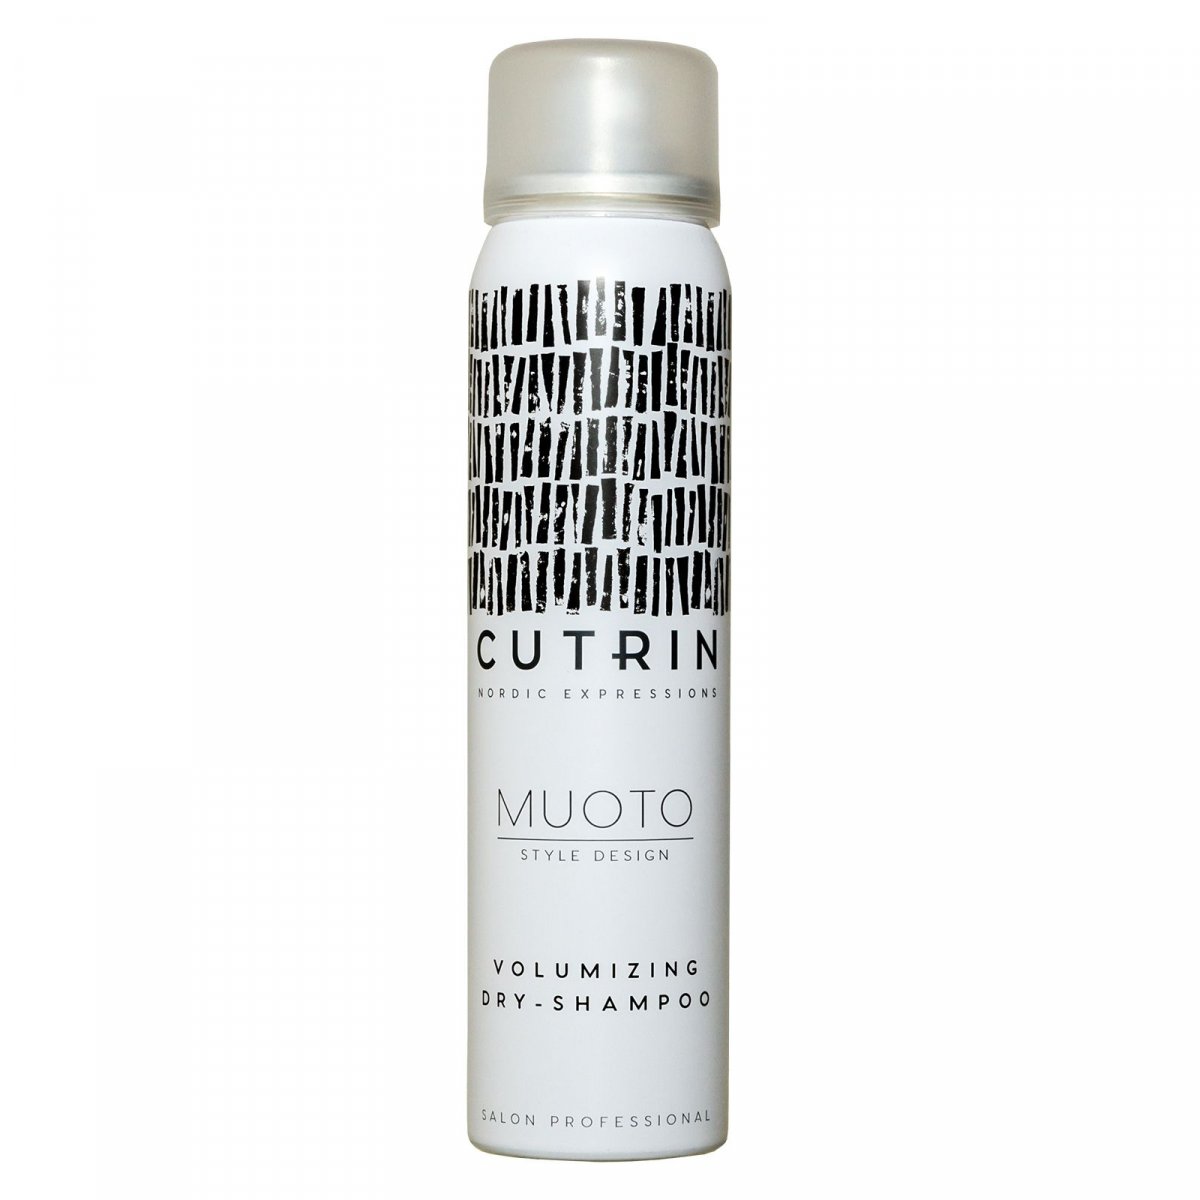 Cutrin Muoto Volumizing Dry Shampoo - Сухой шампунь для объема 100 мл Cutrin (Финляндия) купить по цене 479 руб.